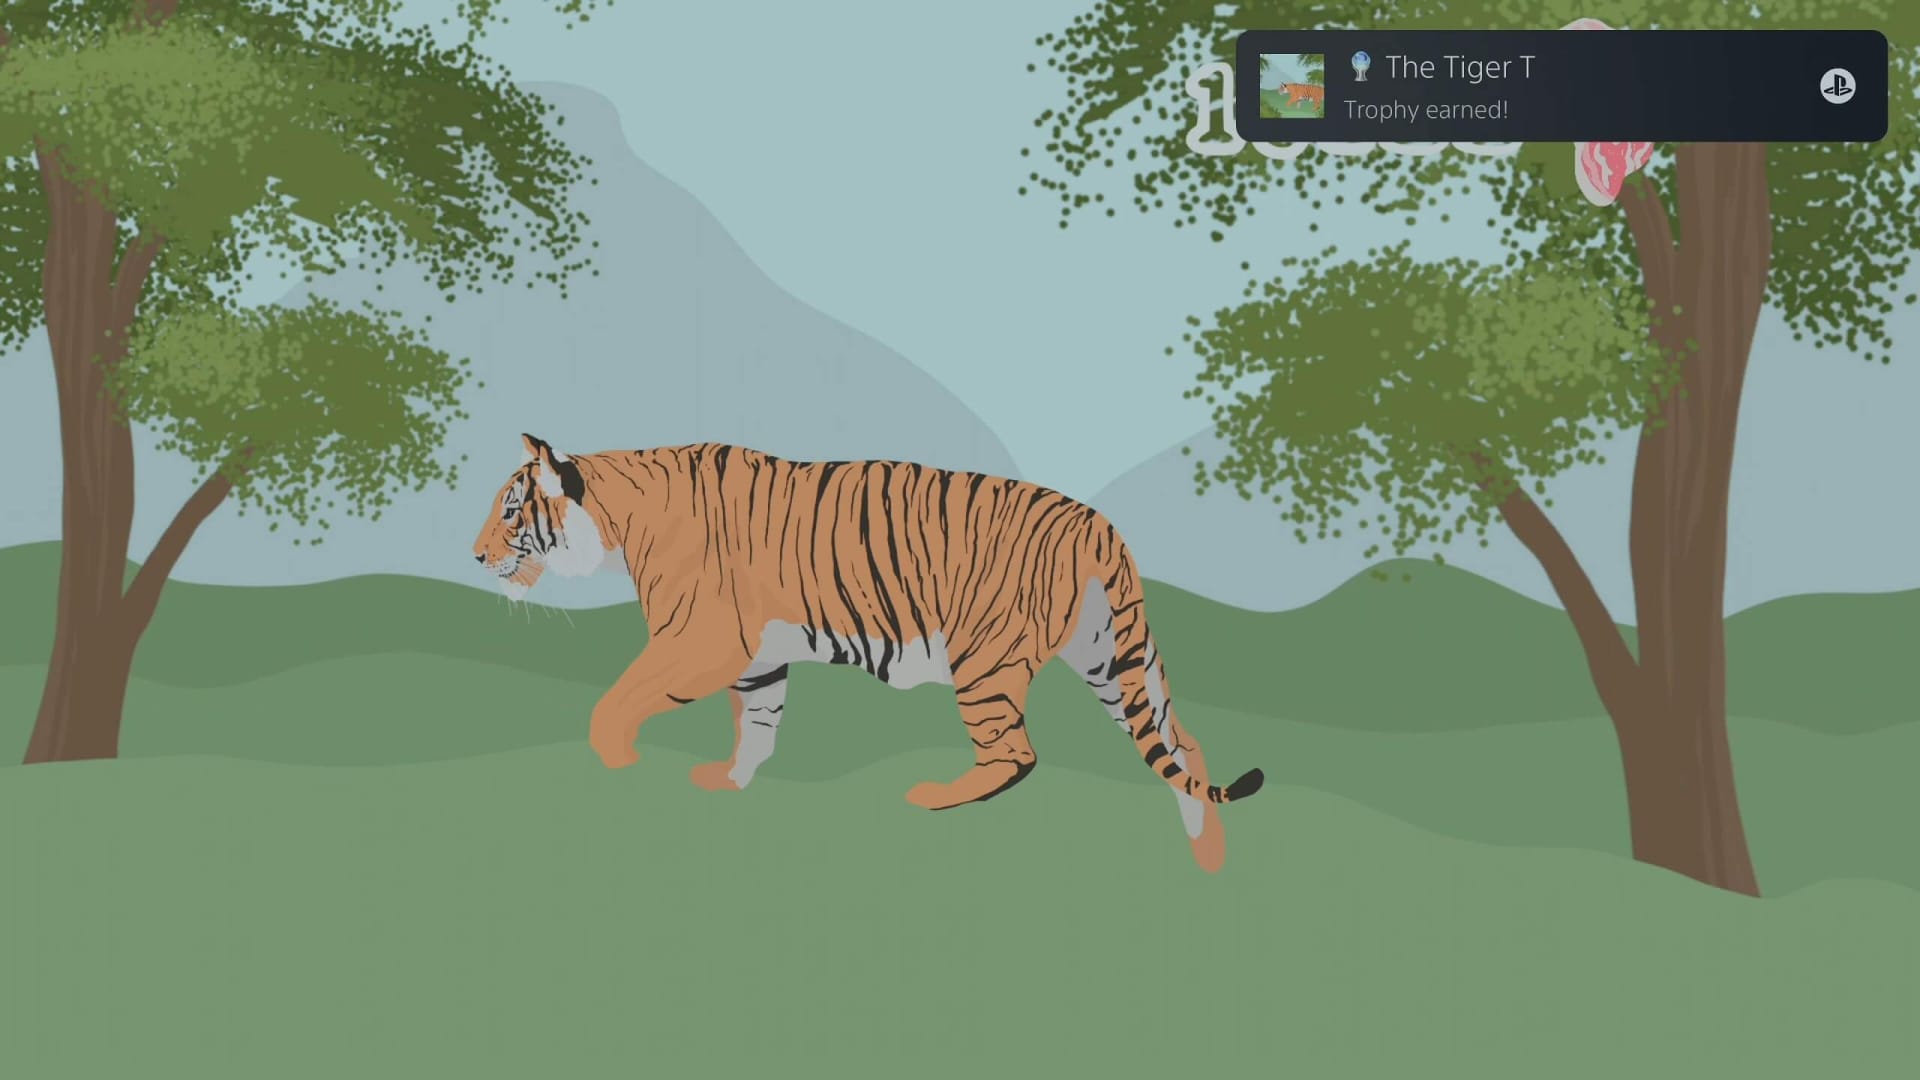 PlayStation Trophy Spam Tiger T Platin ekran görüntüsü.